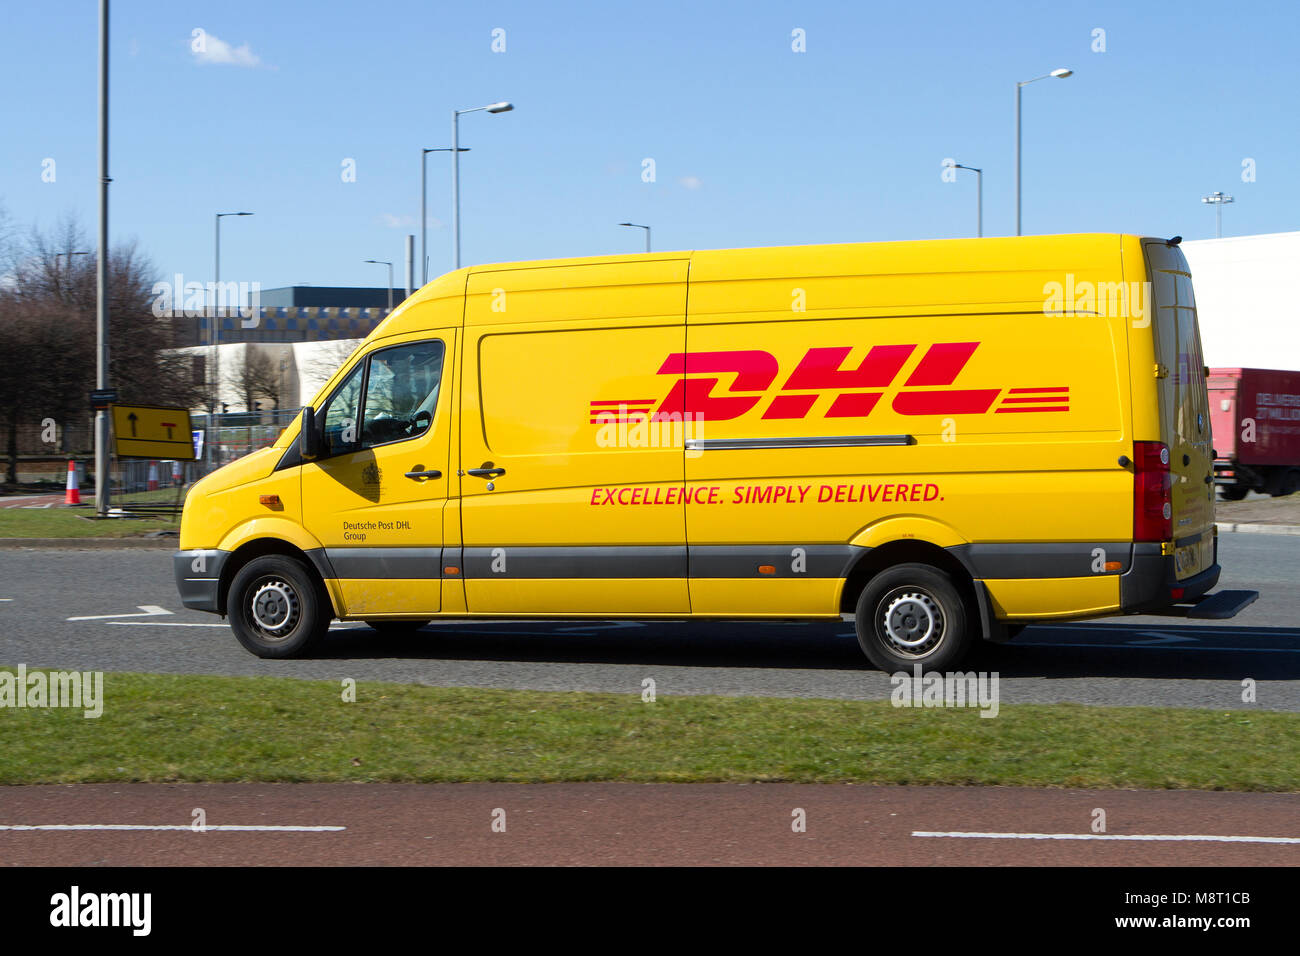 Dhl express Parcel Delivery van Kurier Paket Pakete Transport  Stockfotografie - Alamy